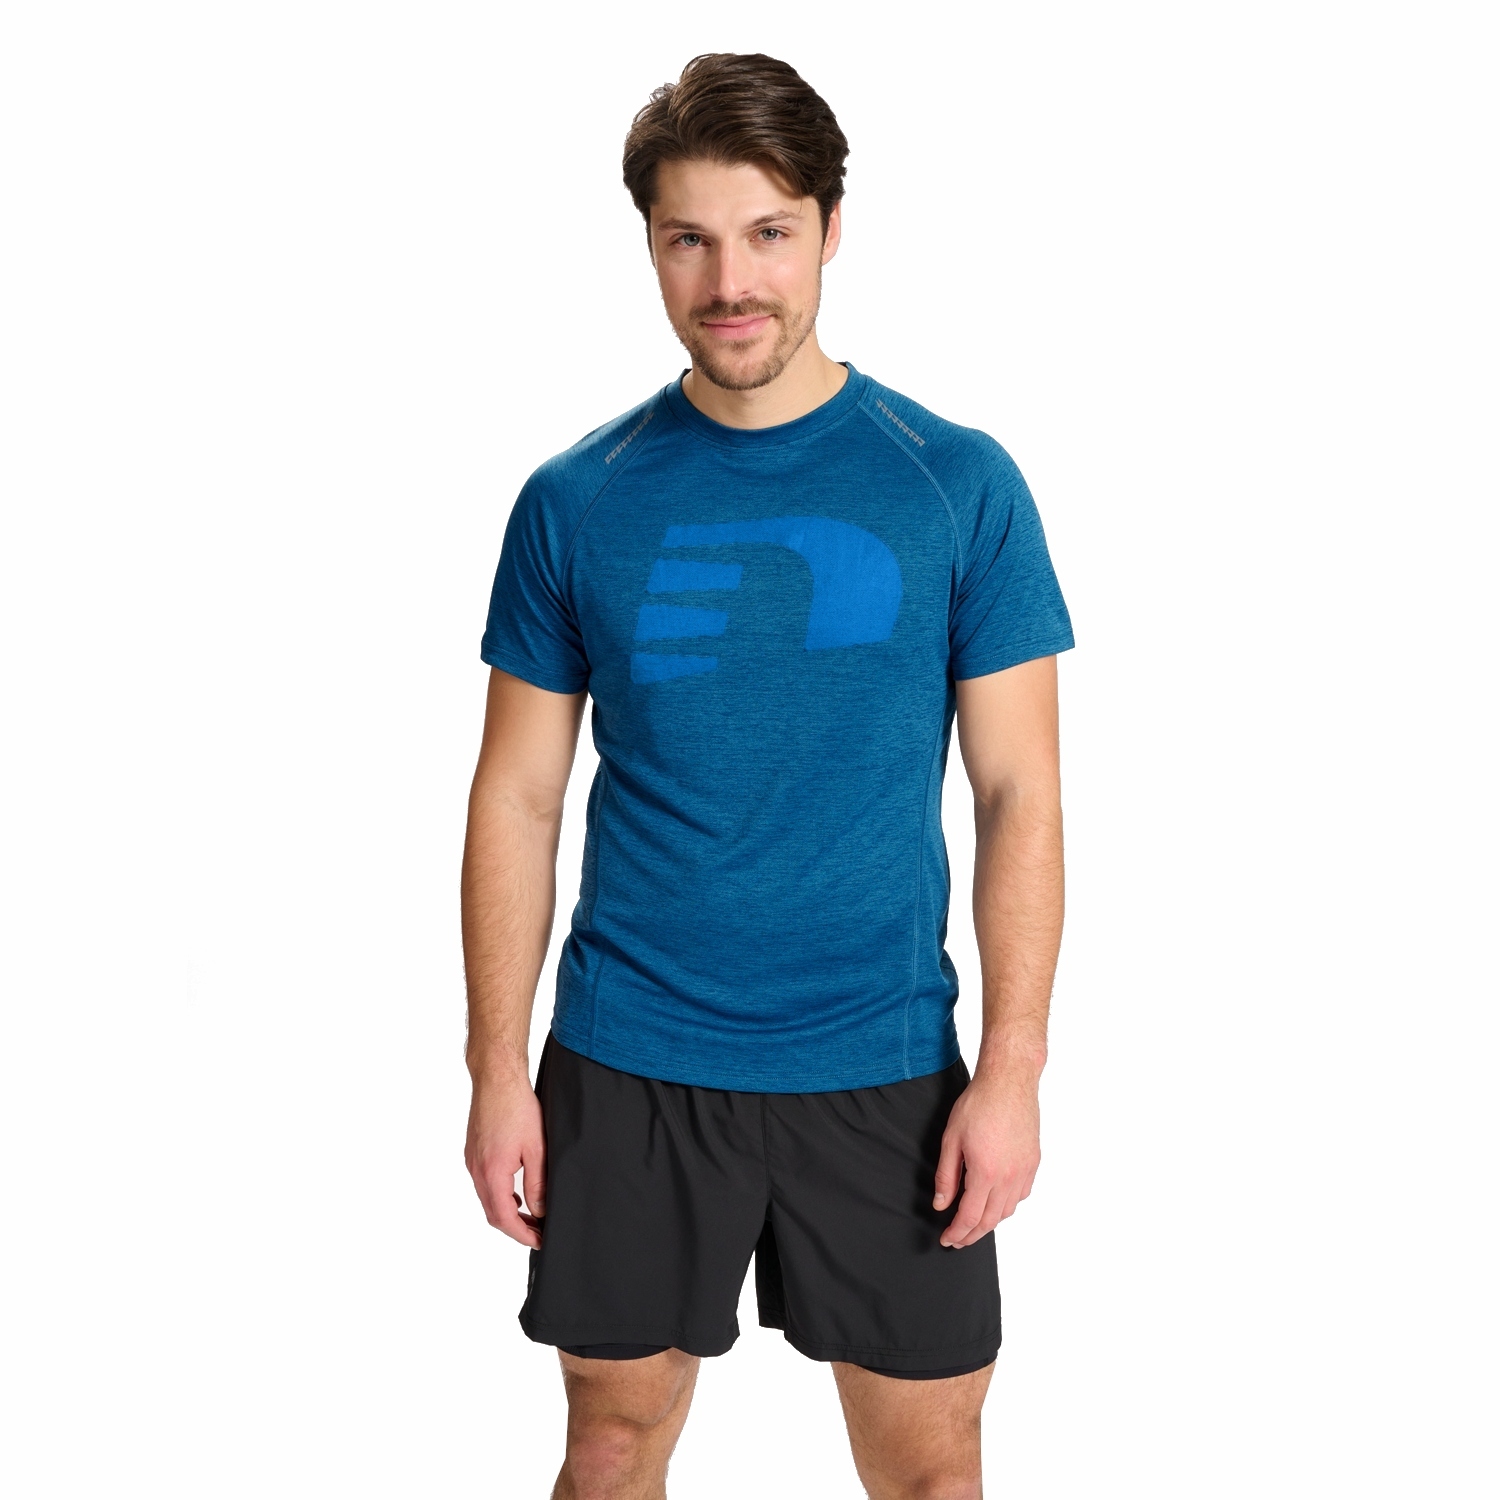 Productfoto van Newline Orlando T-Shirt - majolica blue melange